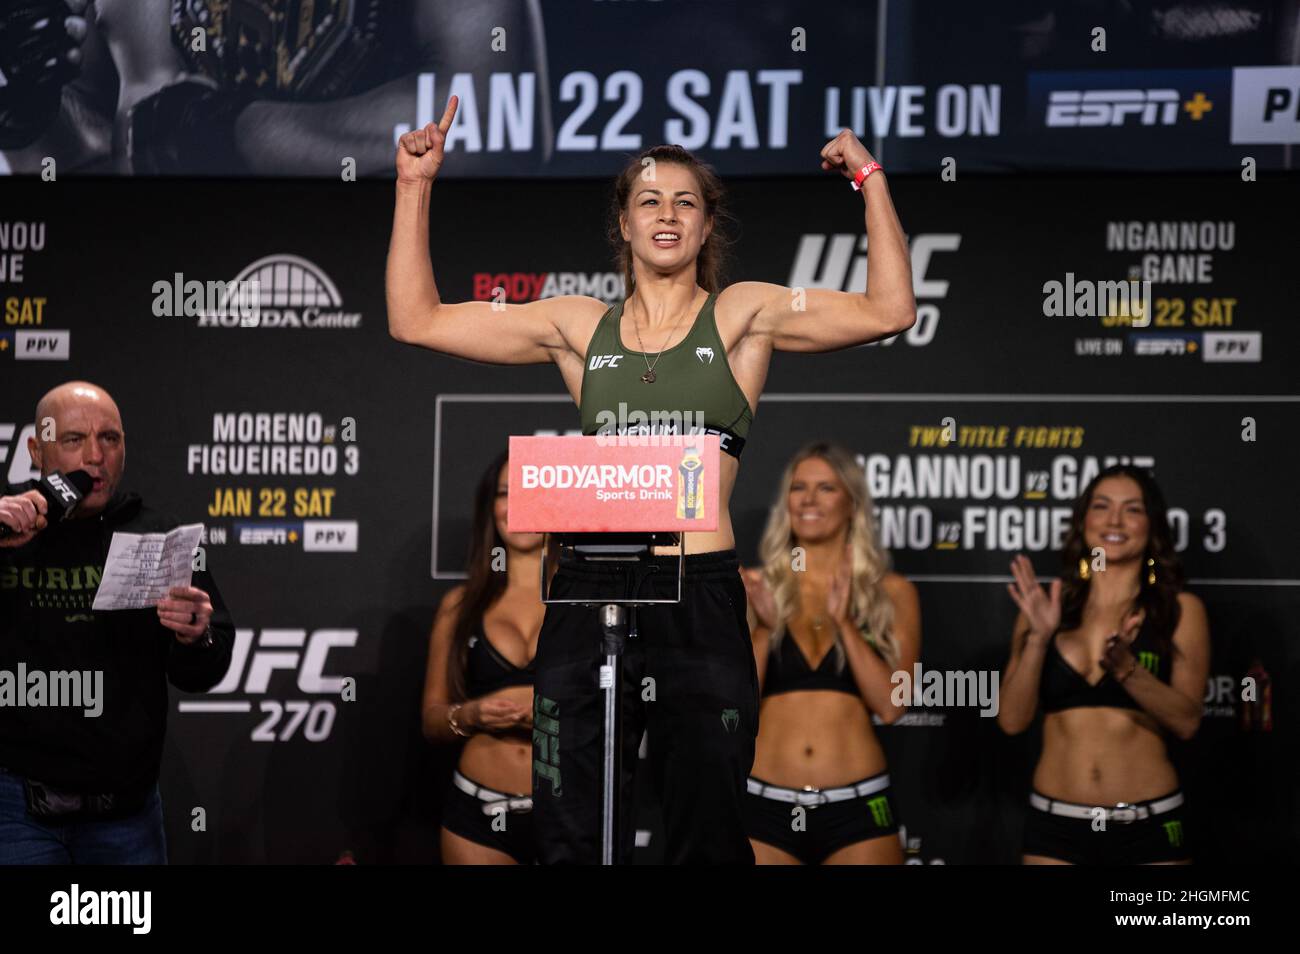 Anaheim, California, USA. 22nd Jan, 2022. UFC 270: Ngannou vs Gane  weigh-ins: Kay Hansen at 125 lbs. and Jasmine Jasudavicius at 125 lbs. at  the weigh-ins. (Credit Image: © Dalton Hamm/ZUMA Press